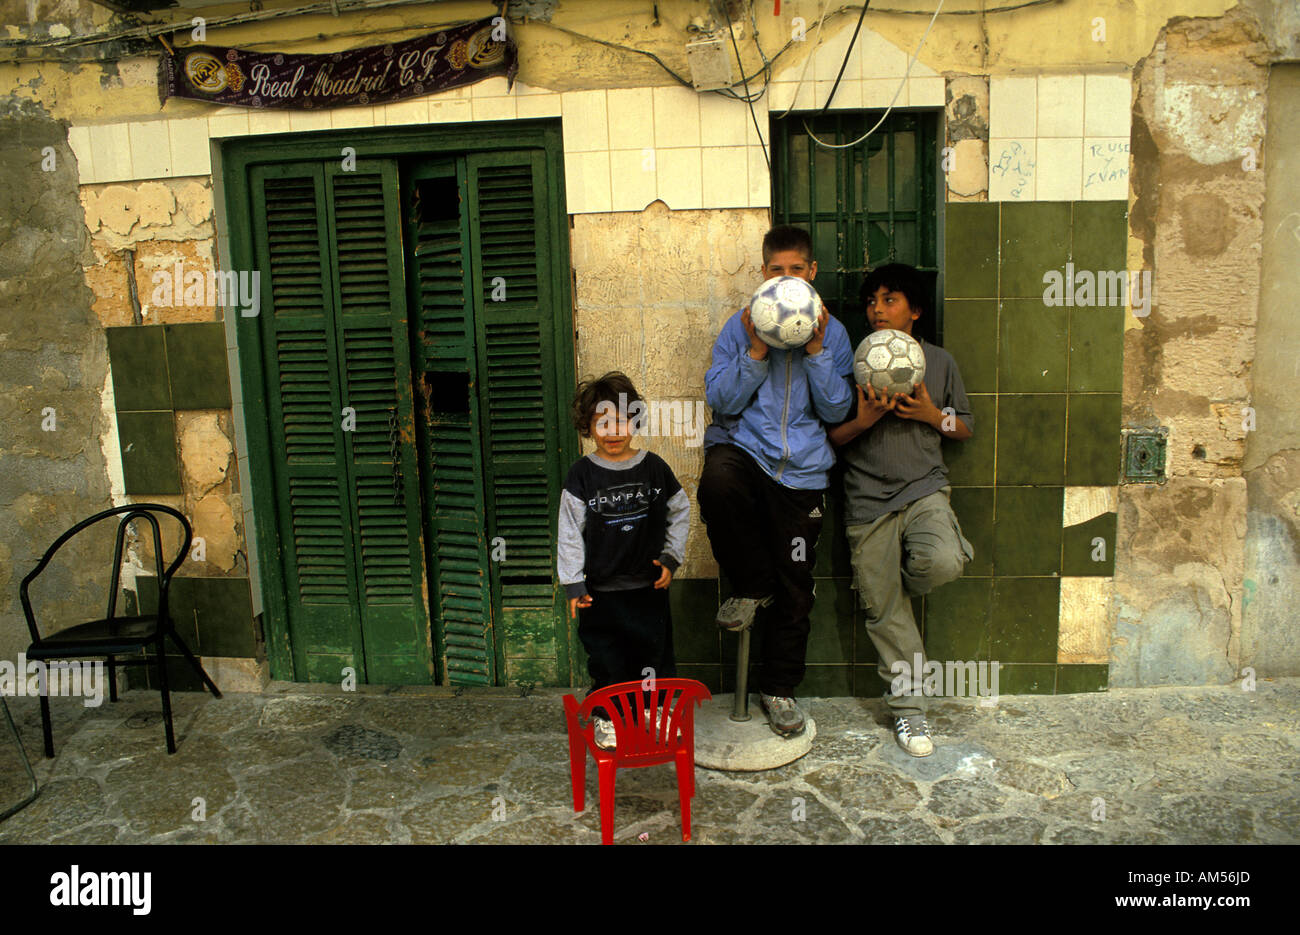 Palma de Mallorca gypsy children in a poor neighbourhood Stock Photo